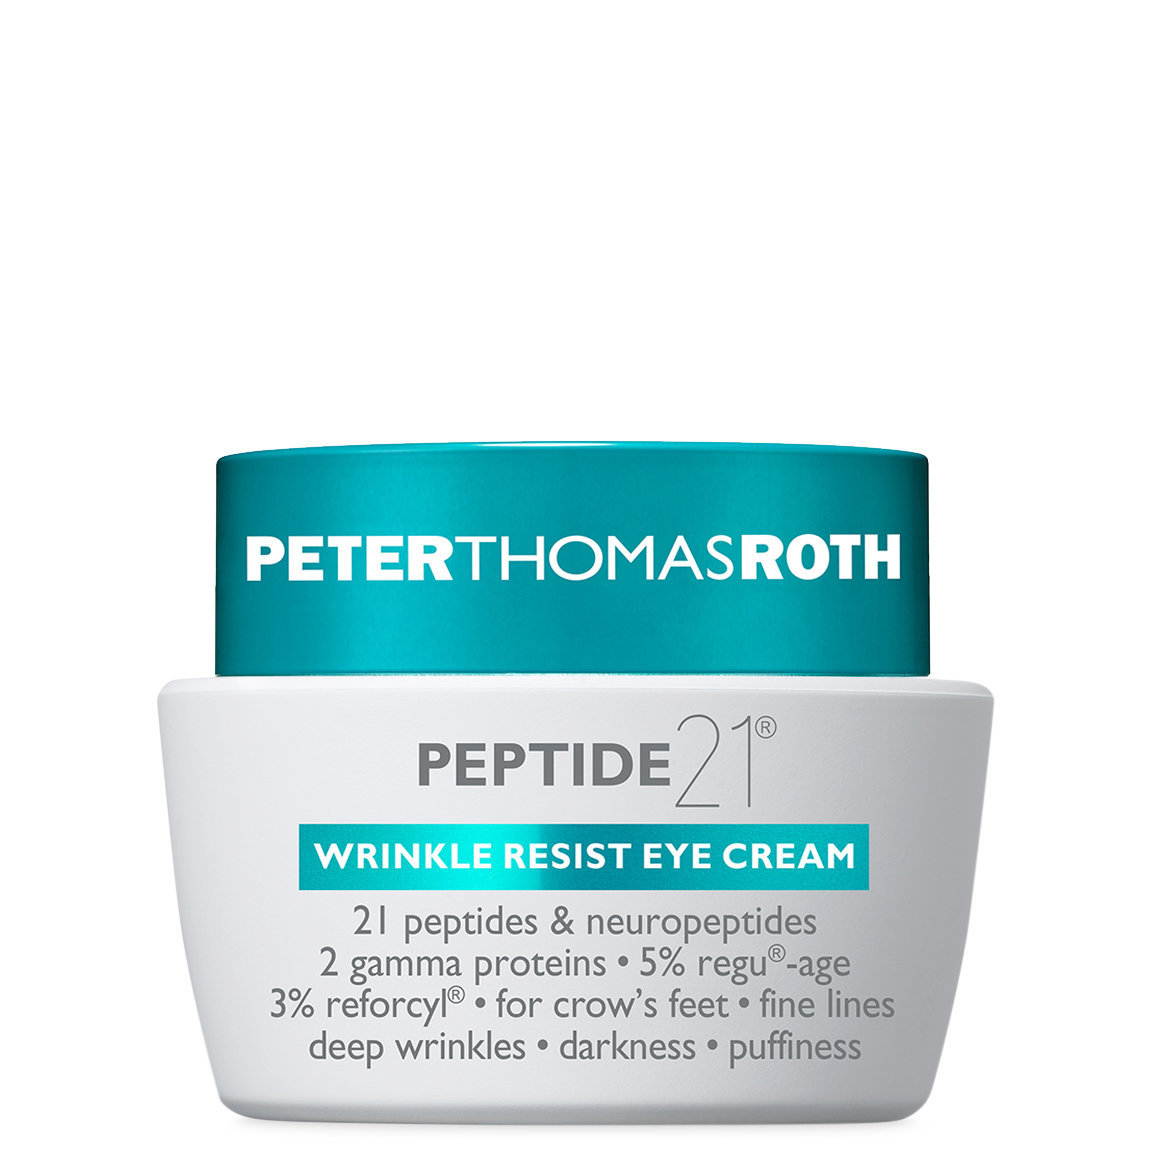 Peter Thomas Roth Peptide 21 Wrinkle Resist Eye Cream alternative view 1 - product swatch.